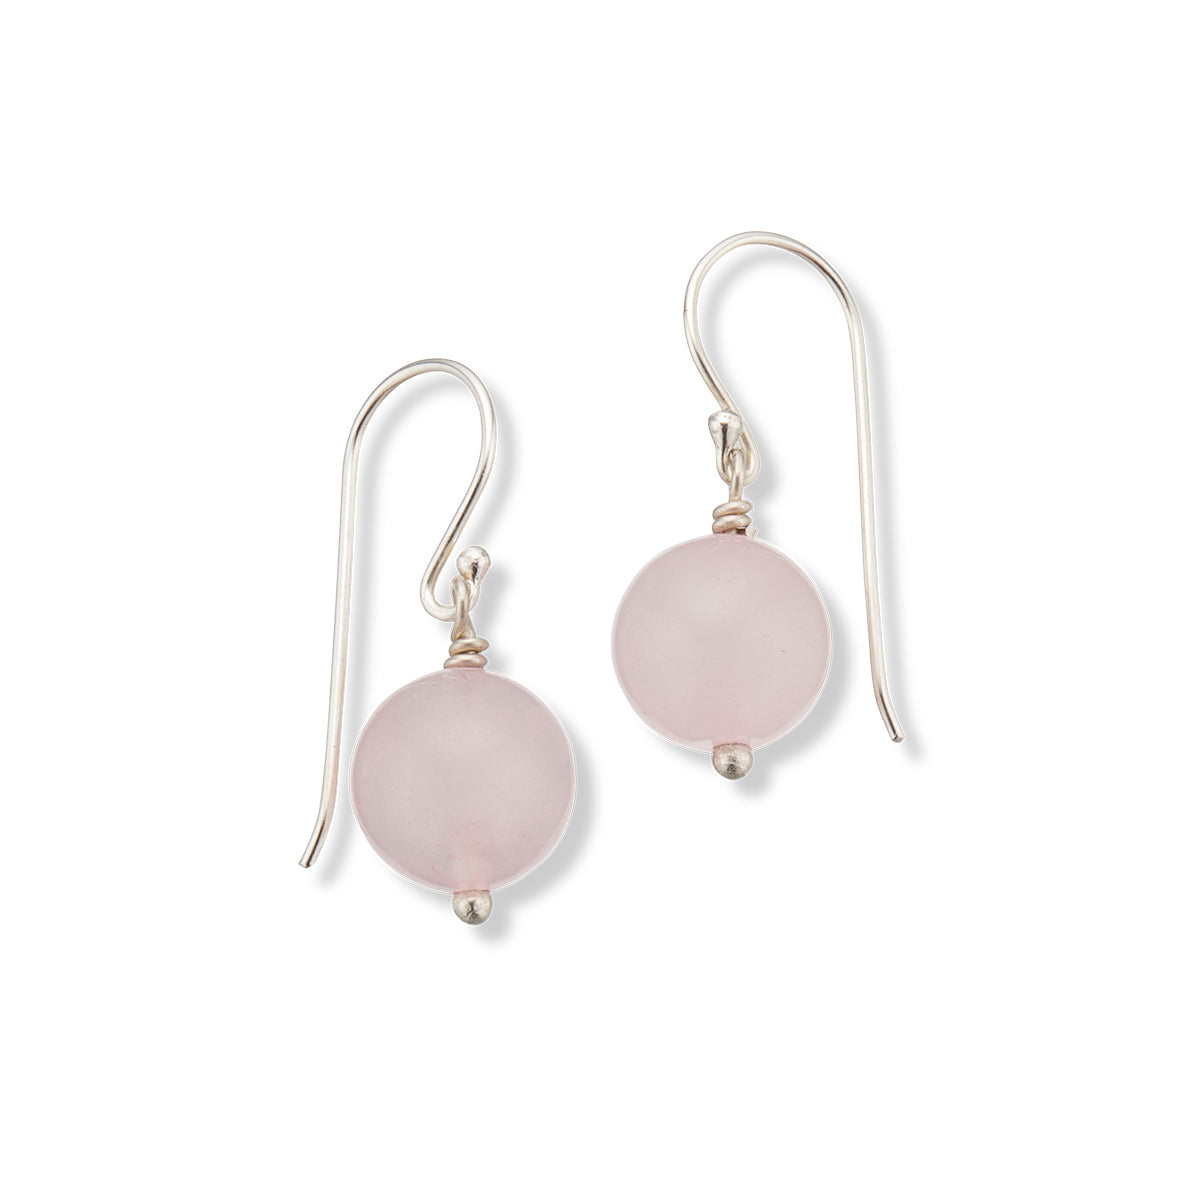 Rose quartz healing gem earrings